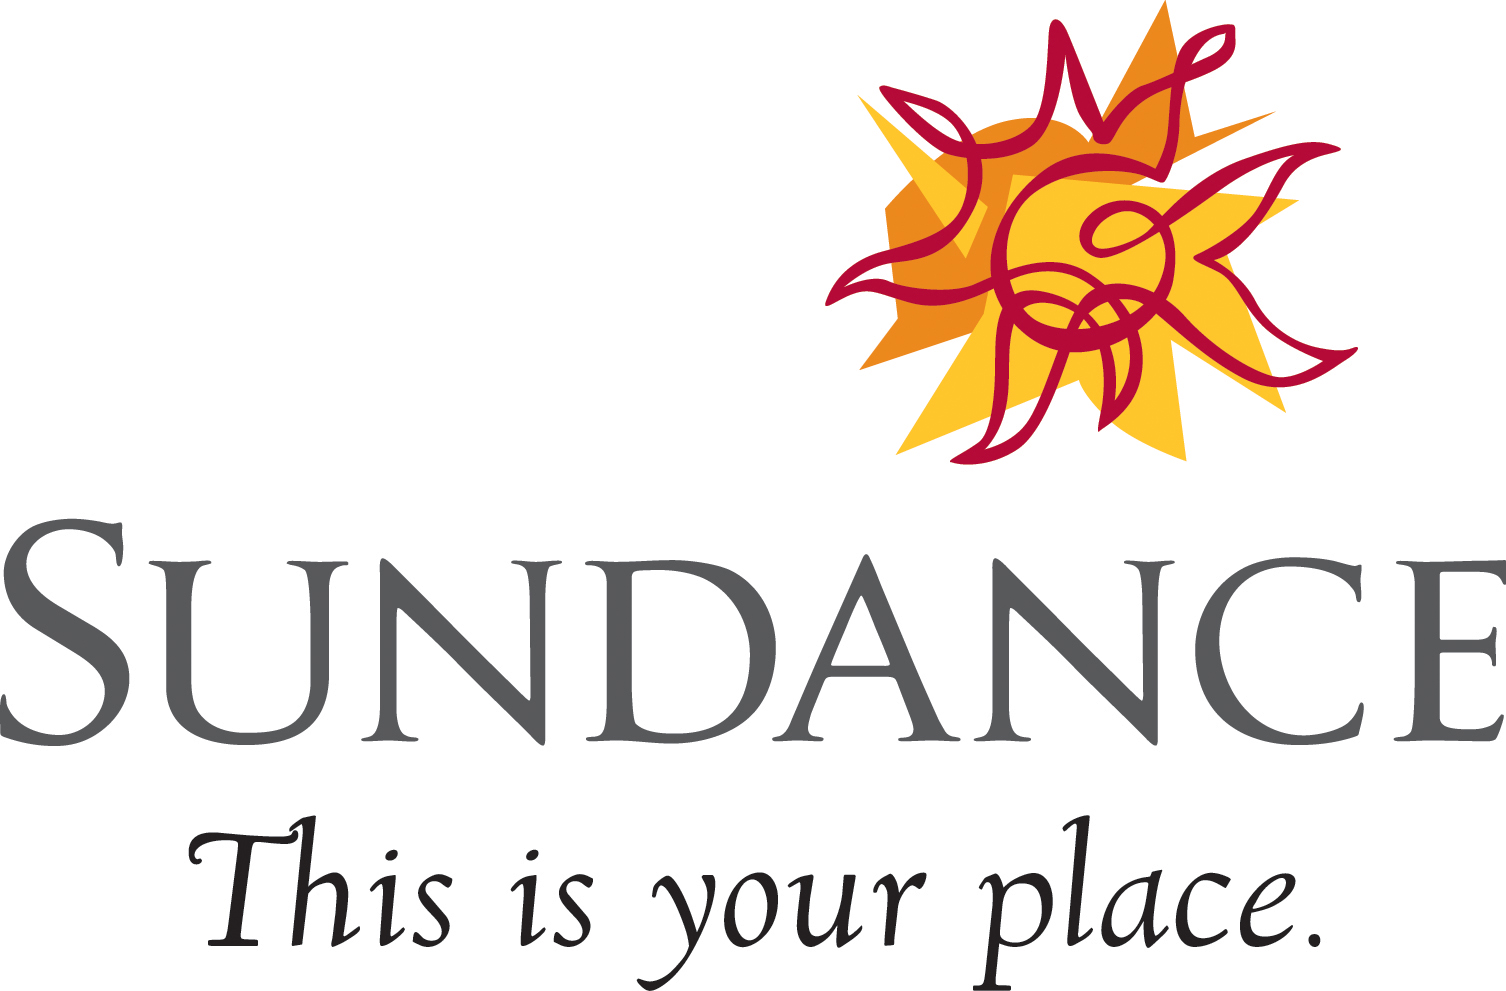 Sundance Community Association